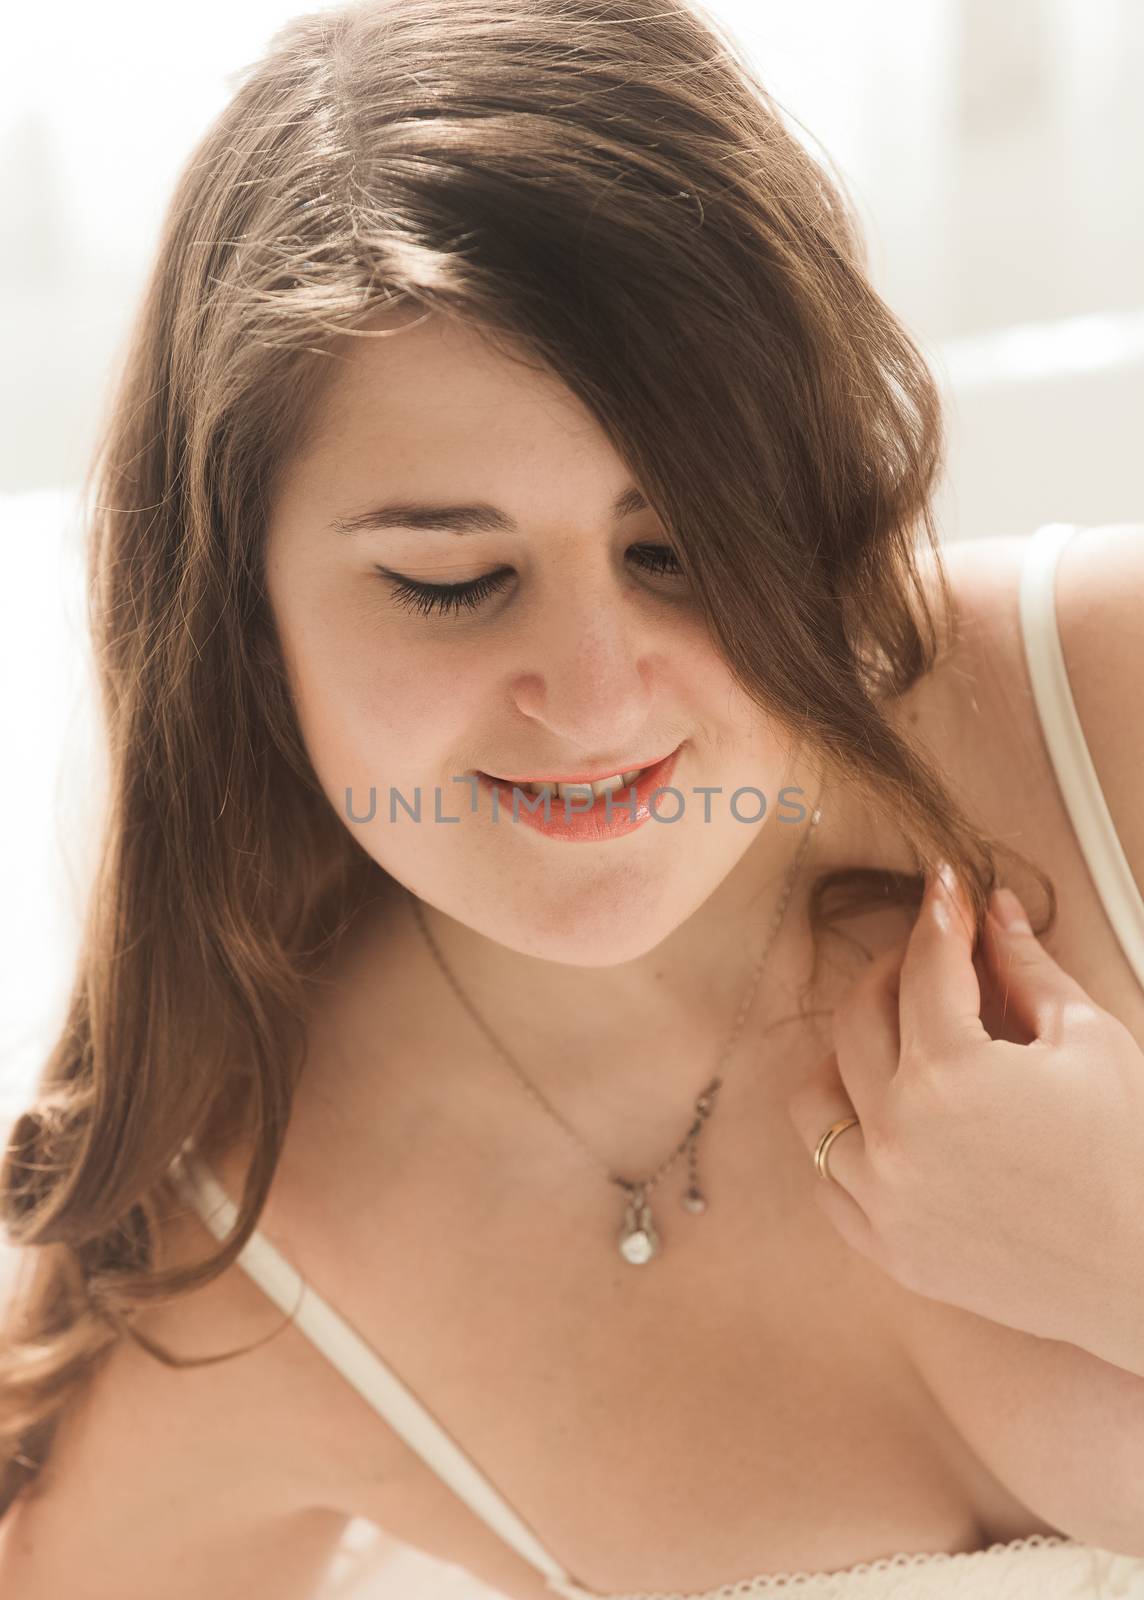 Brunette woman wearing necklace lying in bed